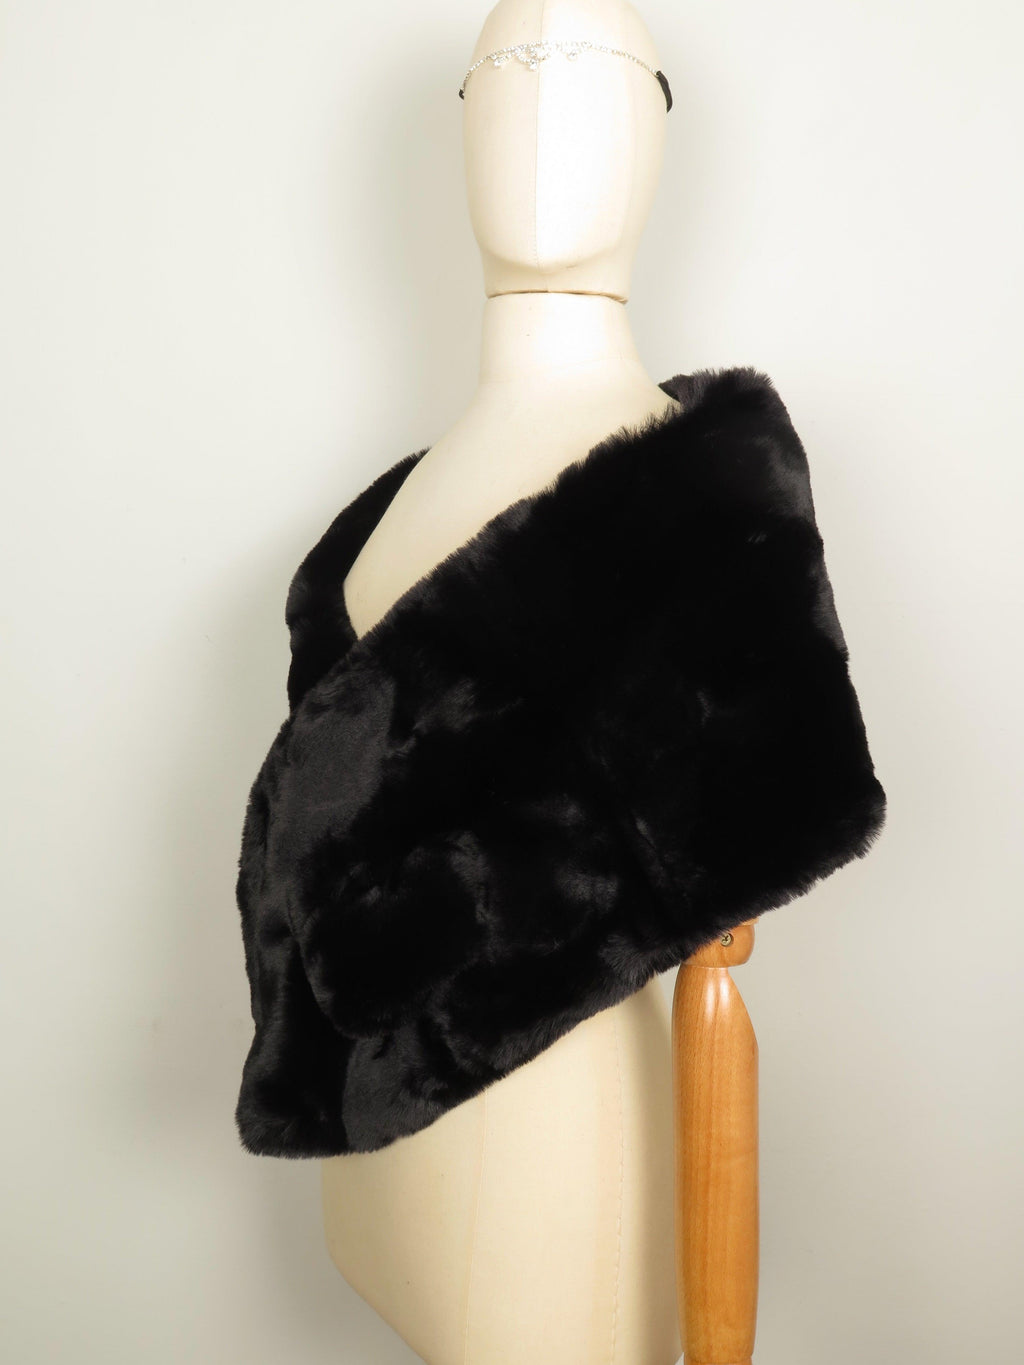 Vintage Style Black Faux Fur Stole/Wrap New - The Harlequin